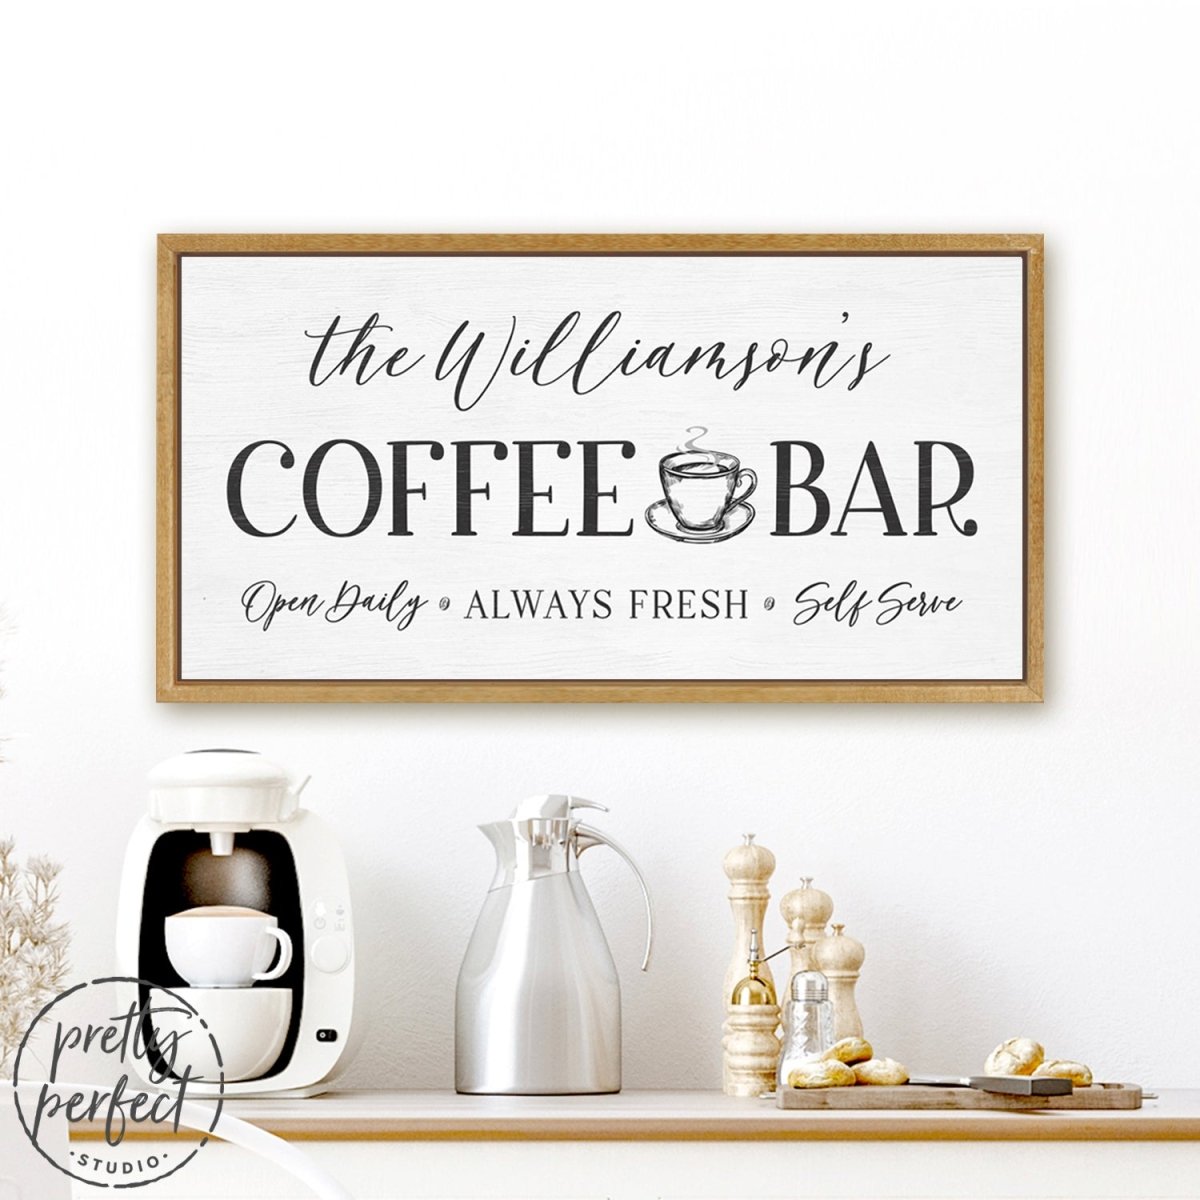 Coffee Shop Custom Sign On Wall Above Coffee Bar - Pretty Perfect Studio